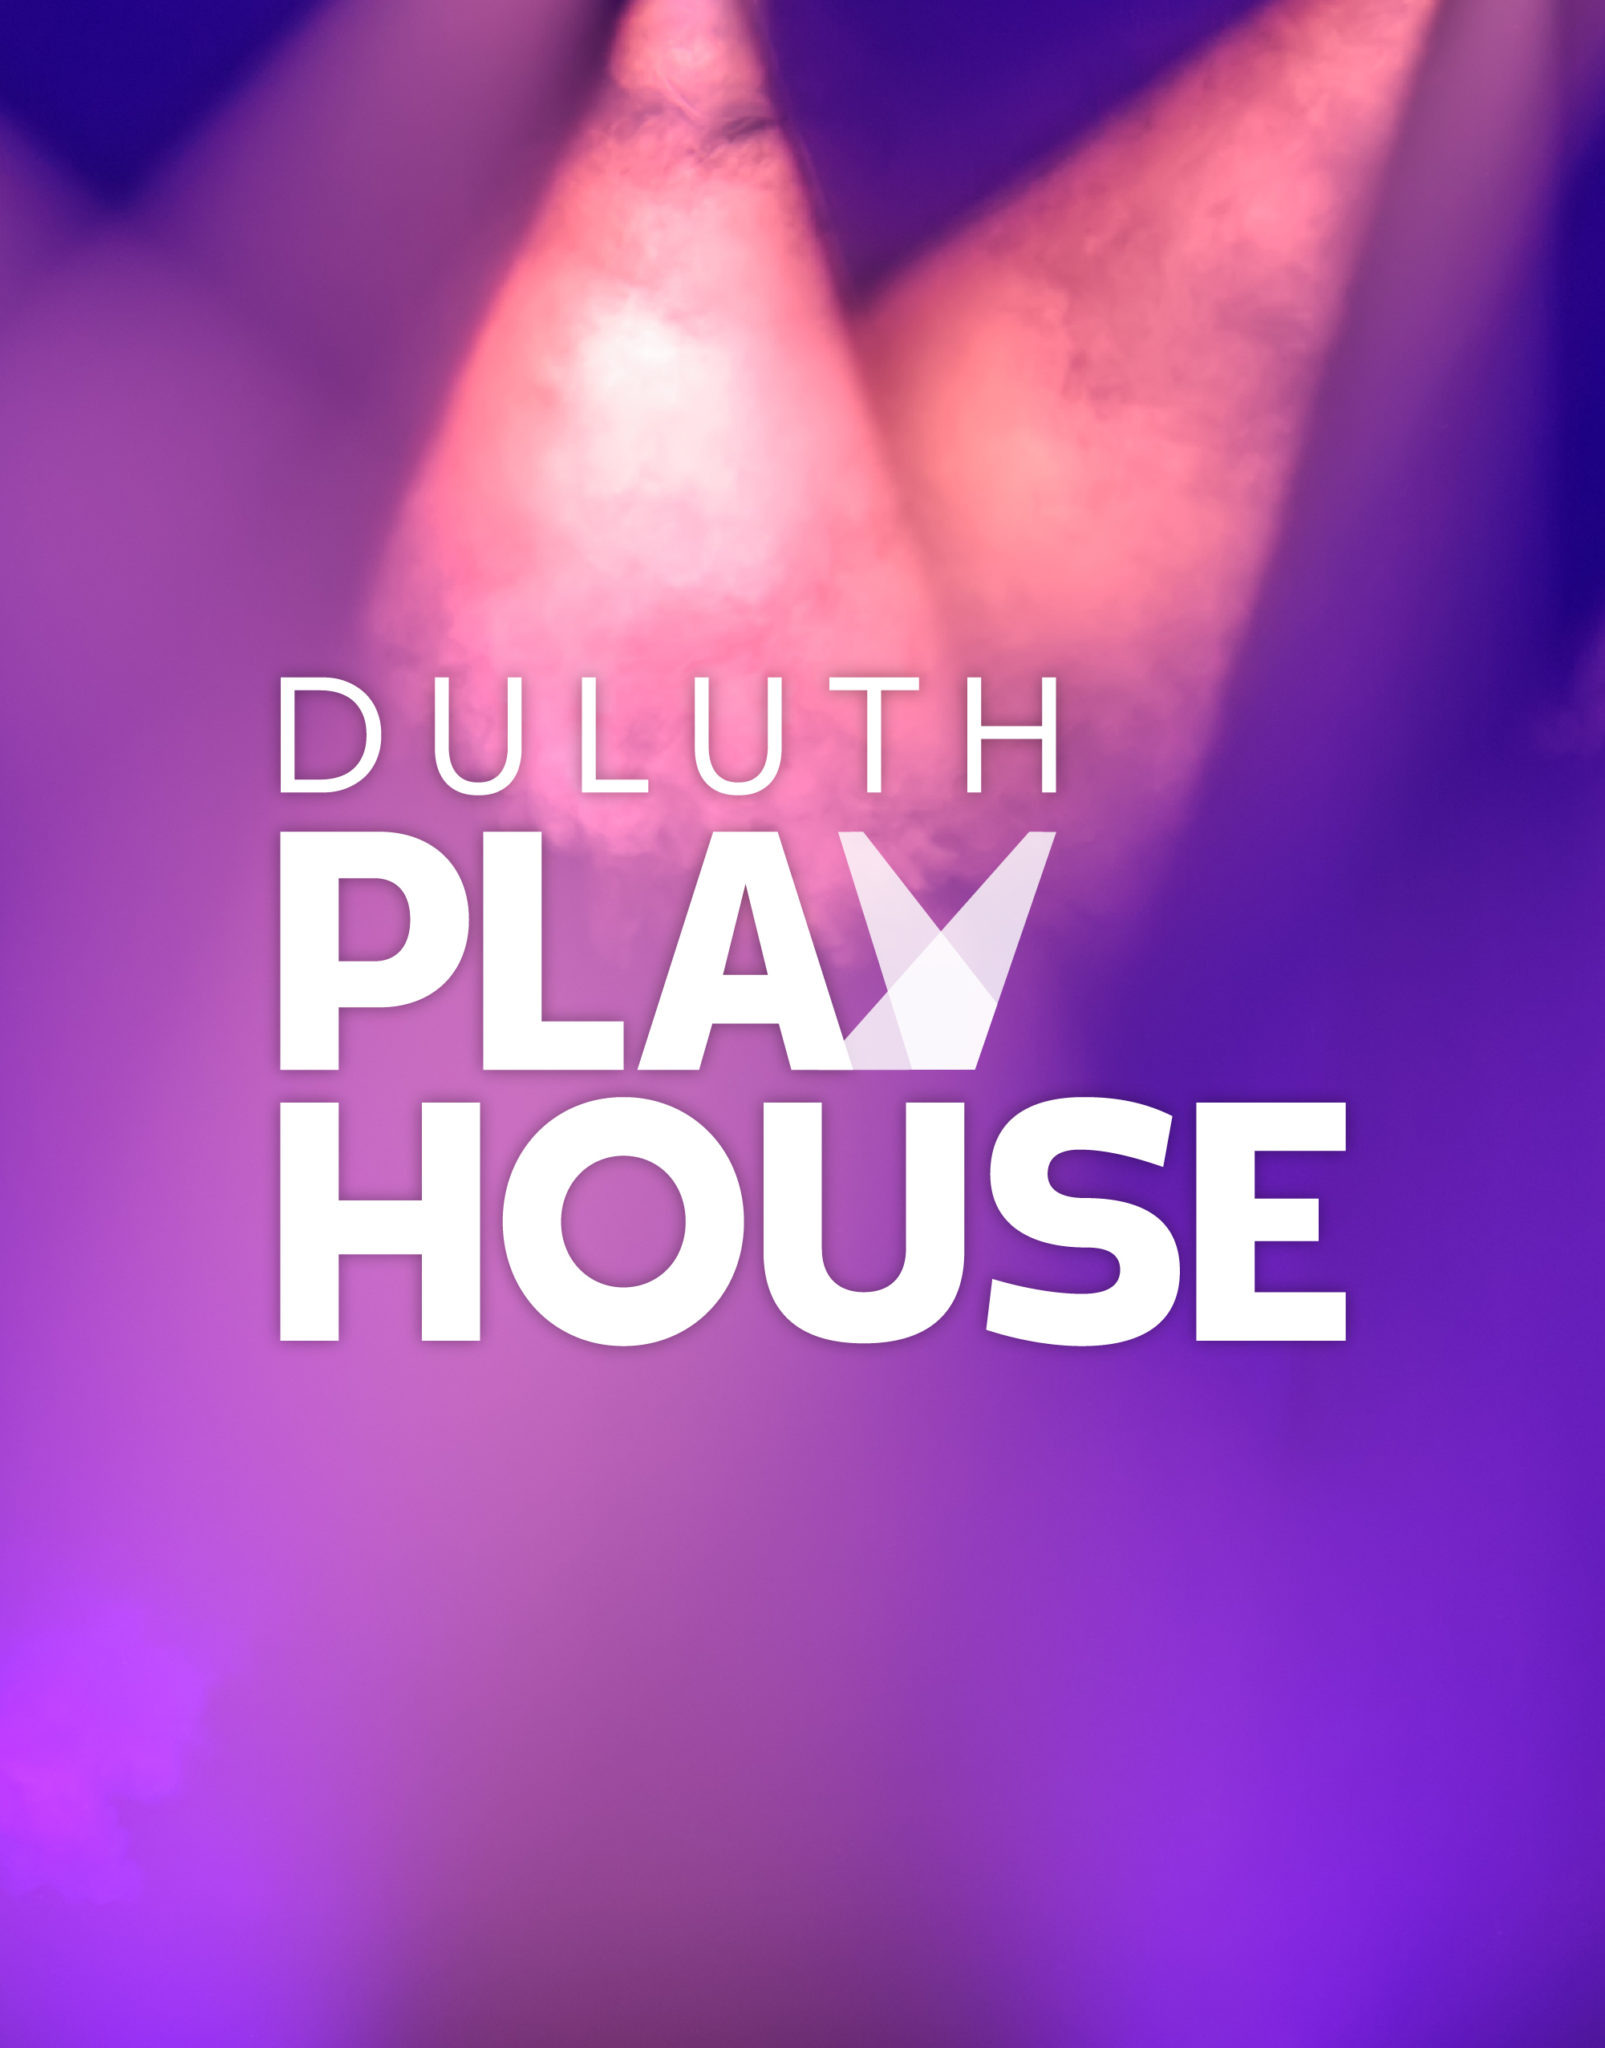 Duluth Playhouse theatre rebrand, created by Šek Design Studio